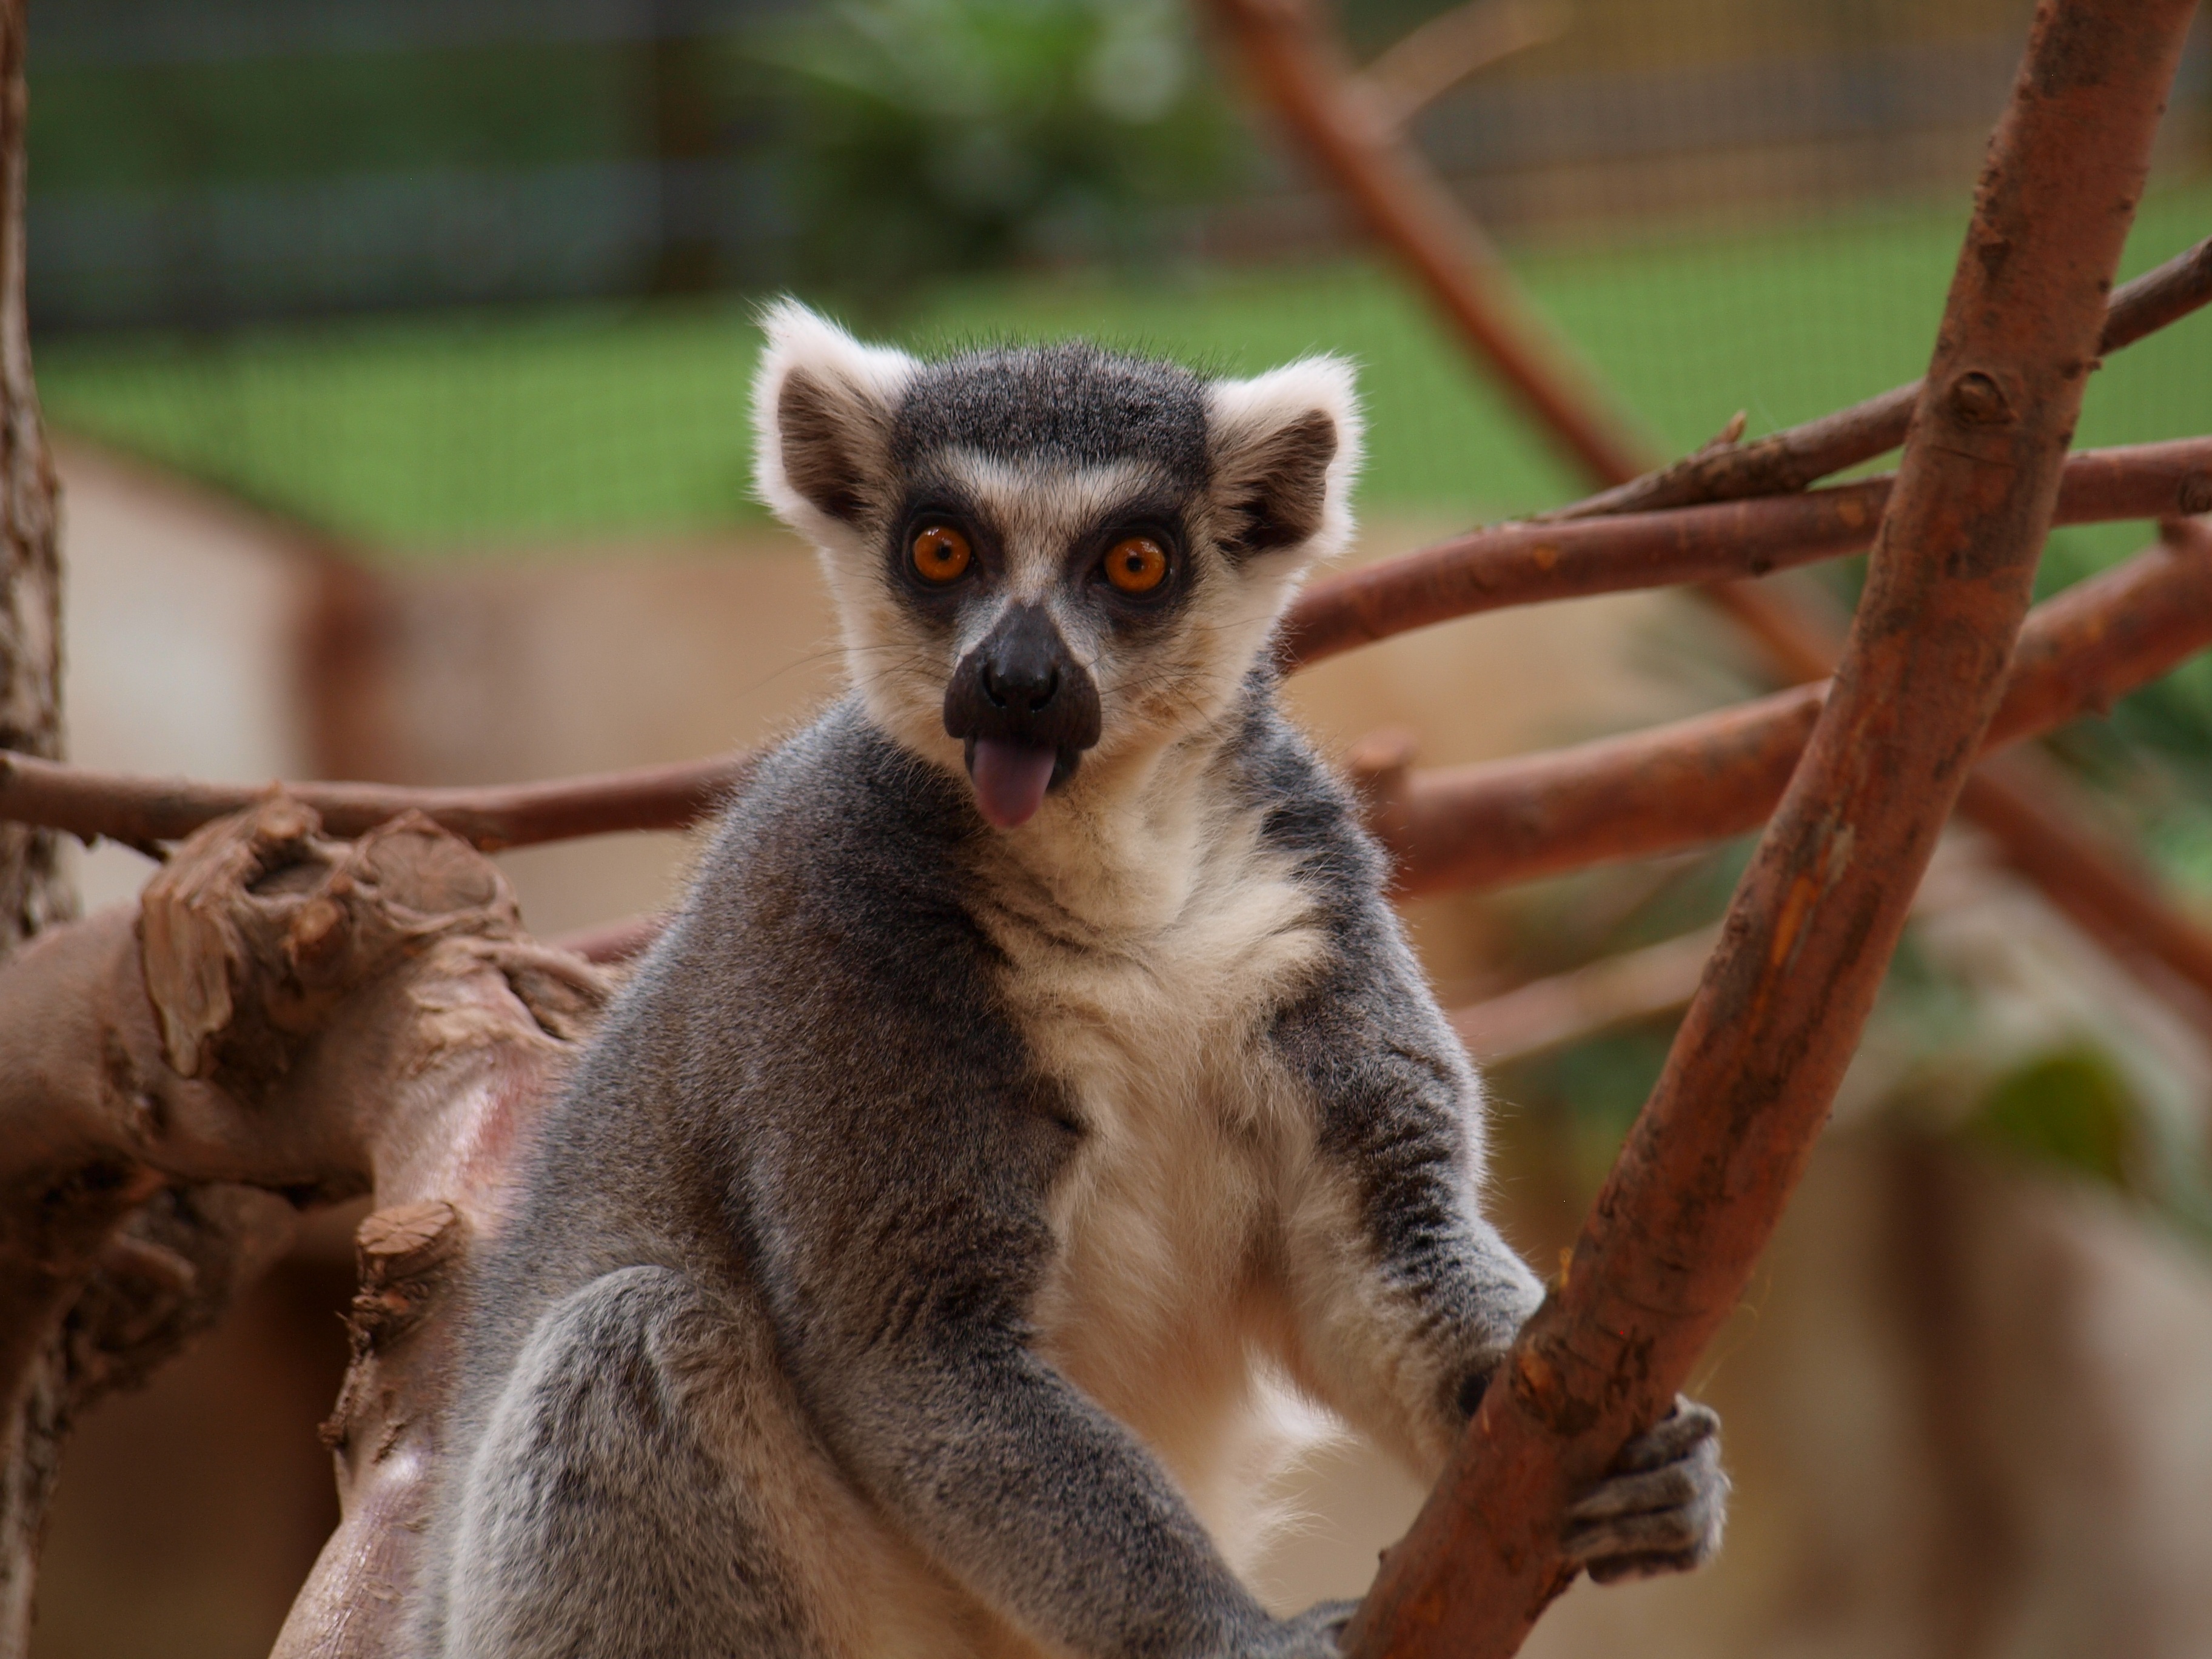 Lemur in the zoo photo